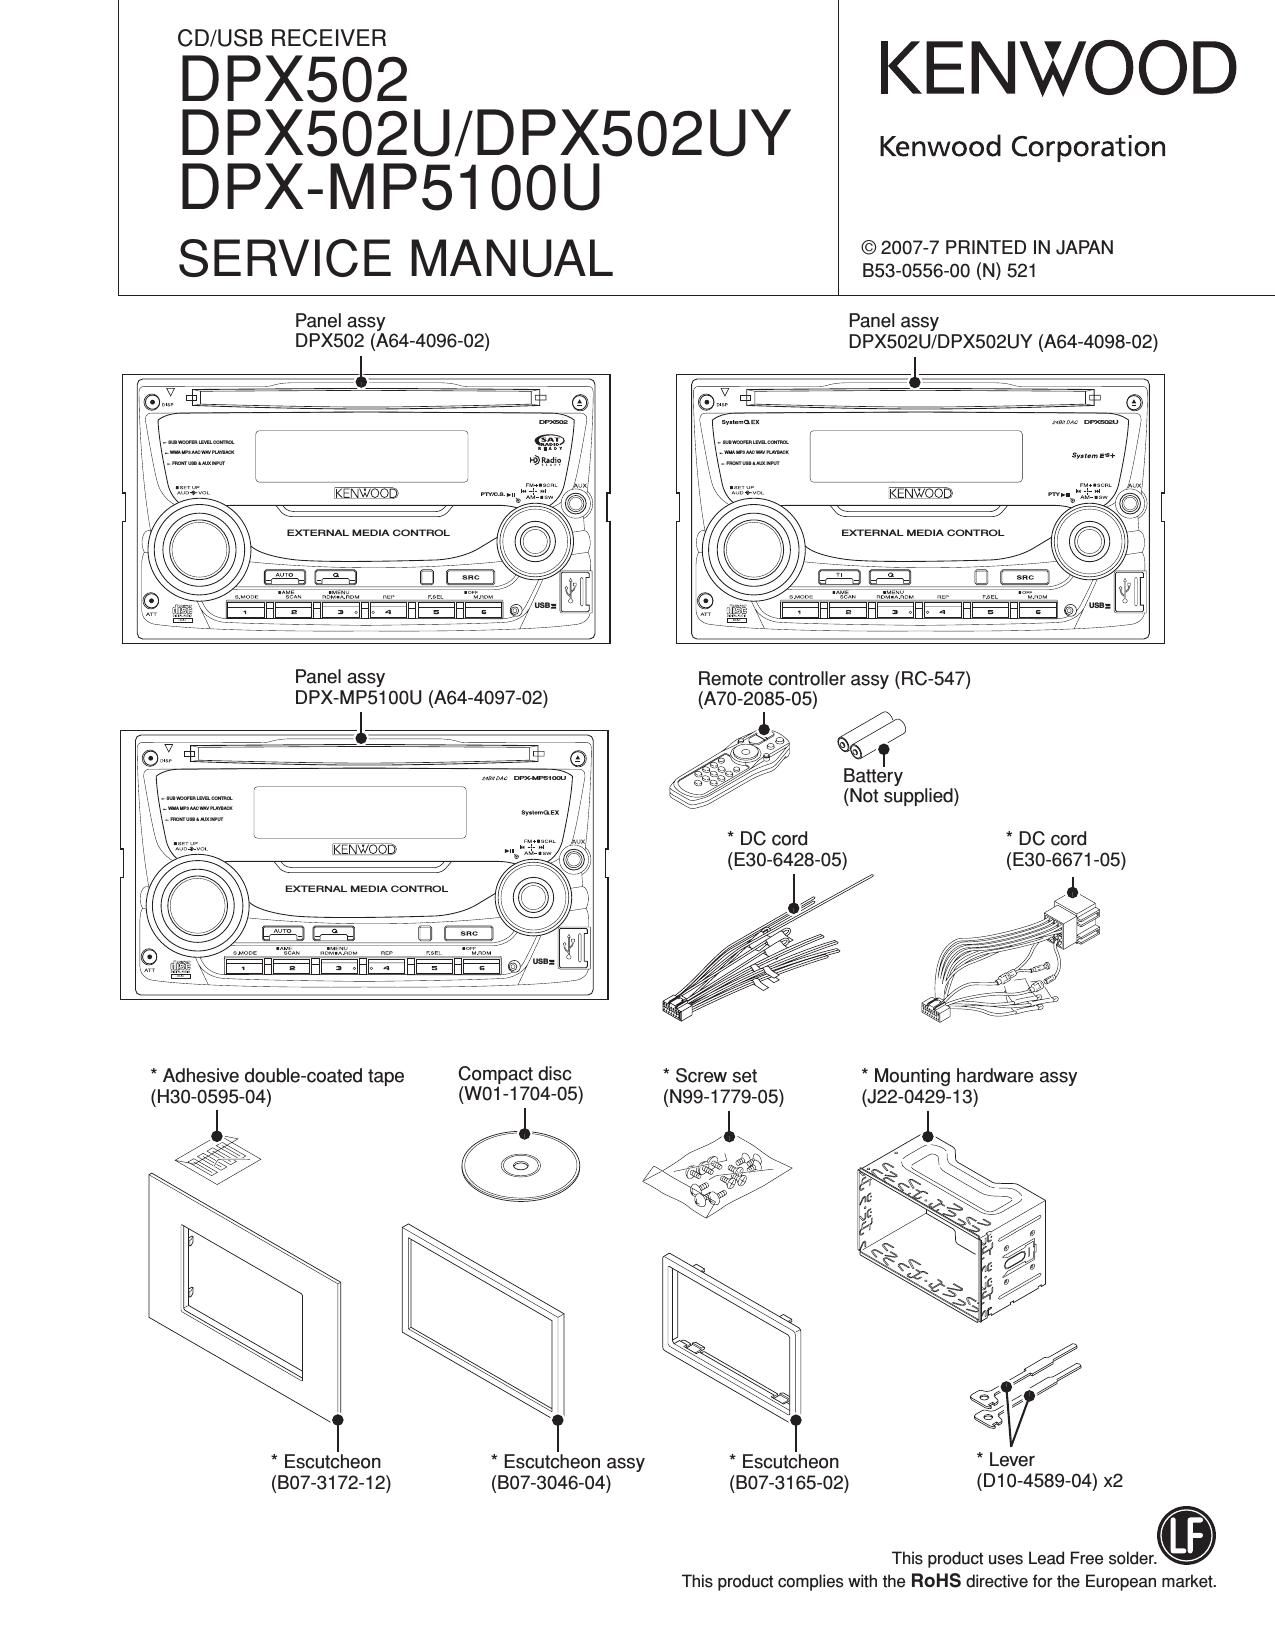 Kenwood DPX 502 U Service Manual